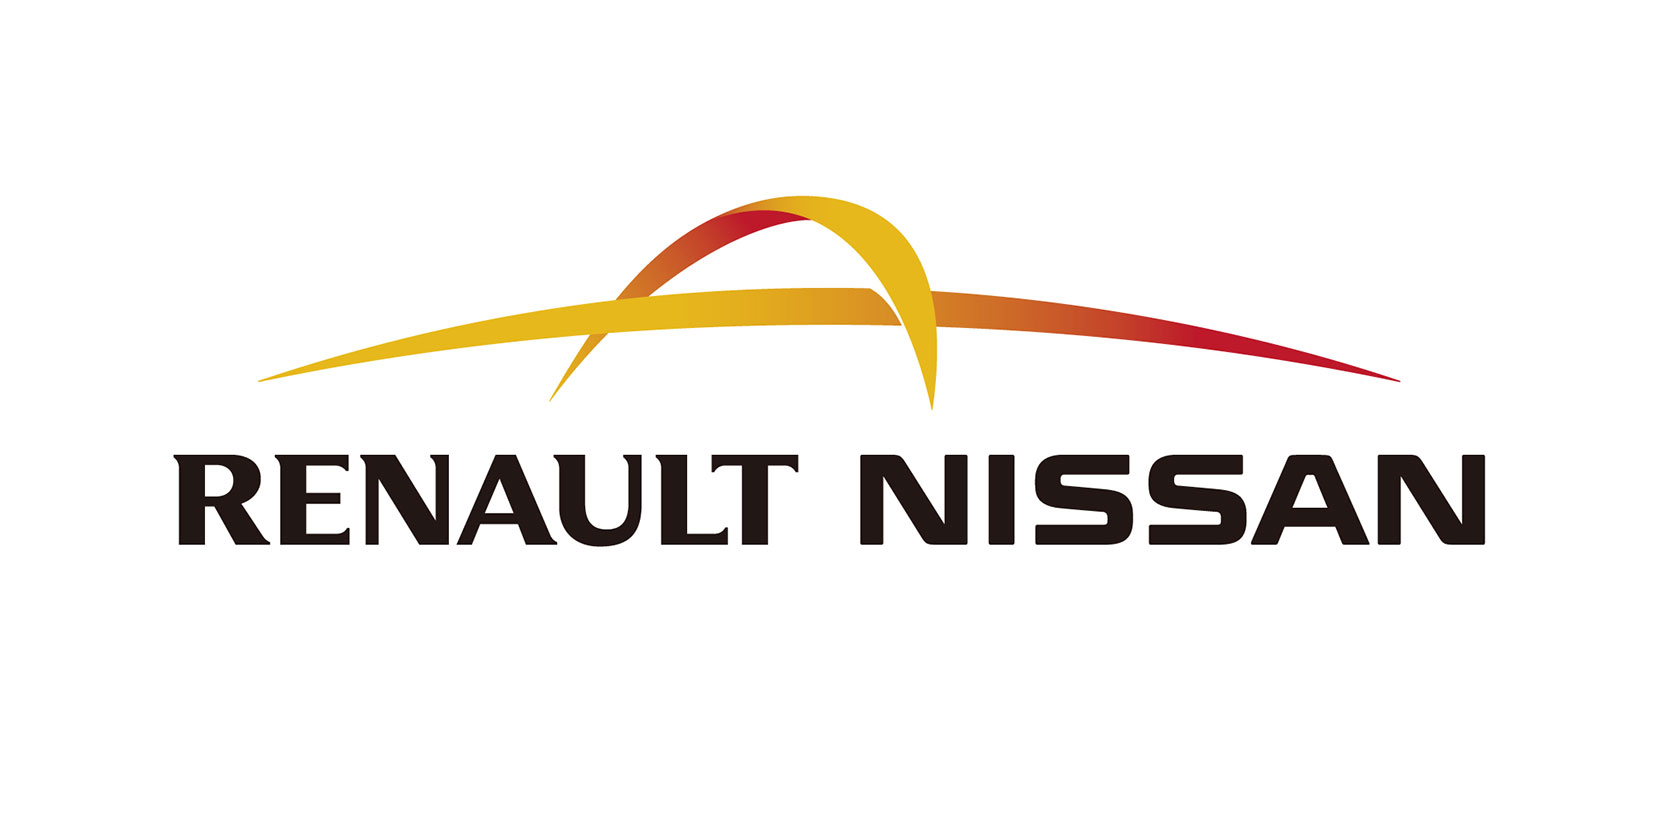 Renault nissan zagreb #2